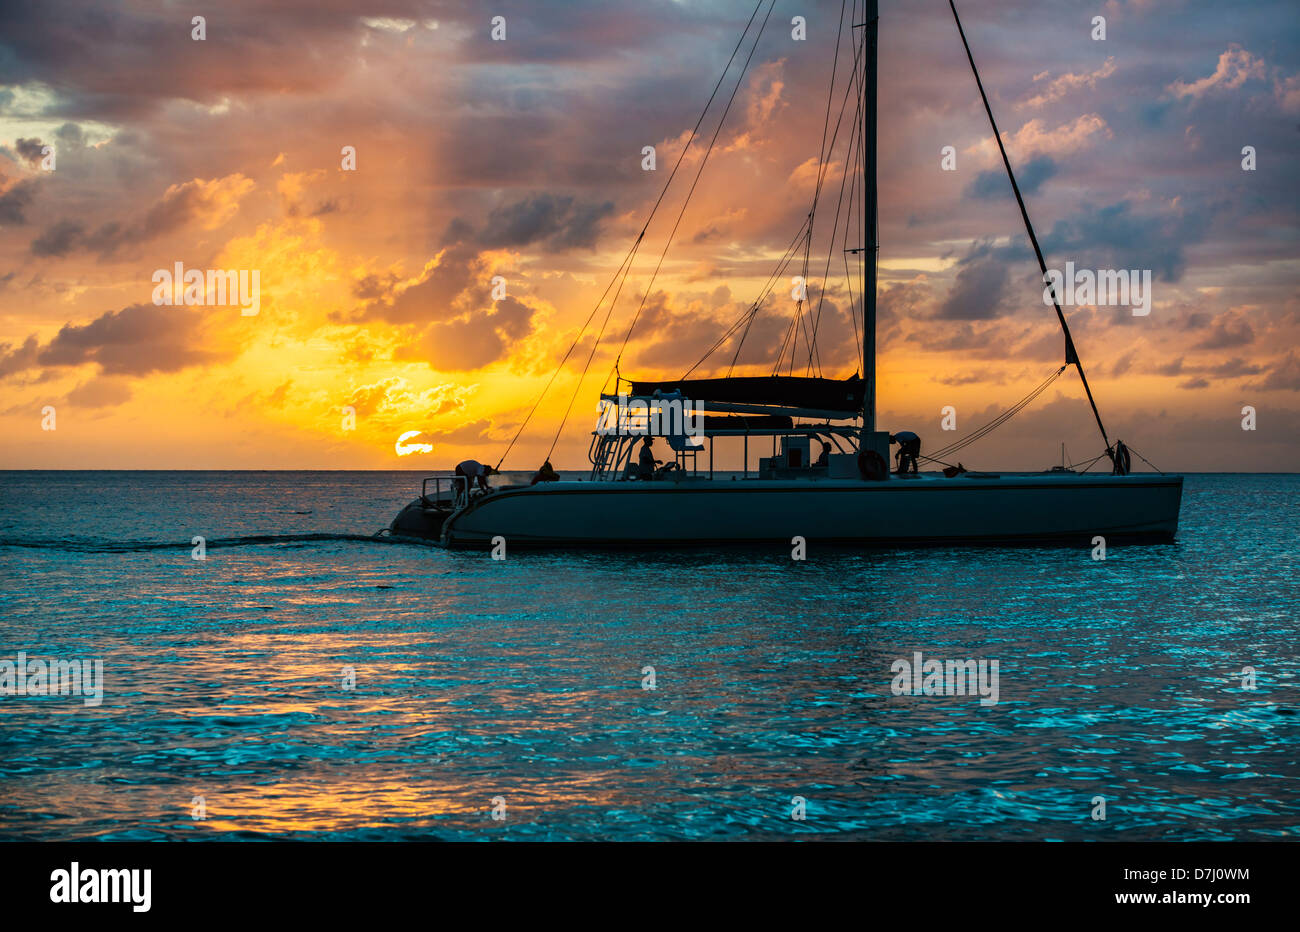 Jamaica, Catamaran on sea at sunset Stock Photo